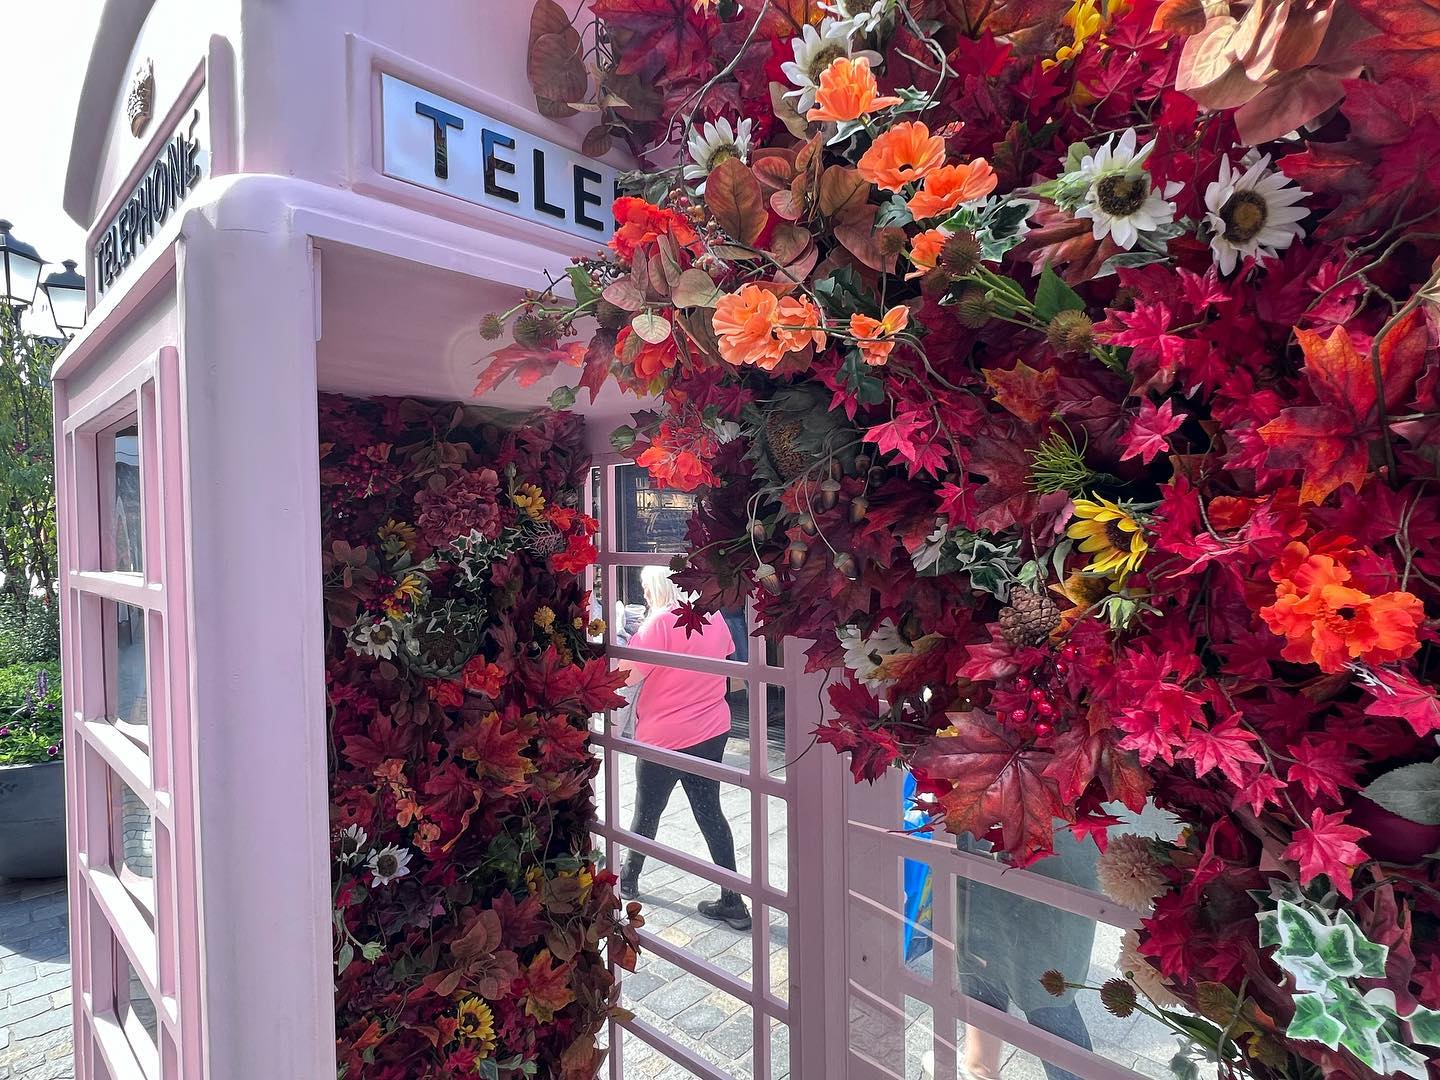 Even shopping provides photo opportunities 
——
#bbcmidlands #igersstaffordshire #mcarthurglenwestmidlands #flowers #pink #shopping #telephonebox #timing #everything_imaginable #ukpotd #appicoftheweek #visitengland